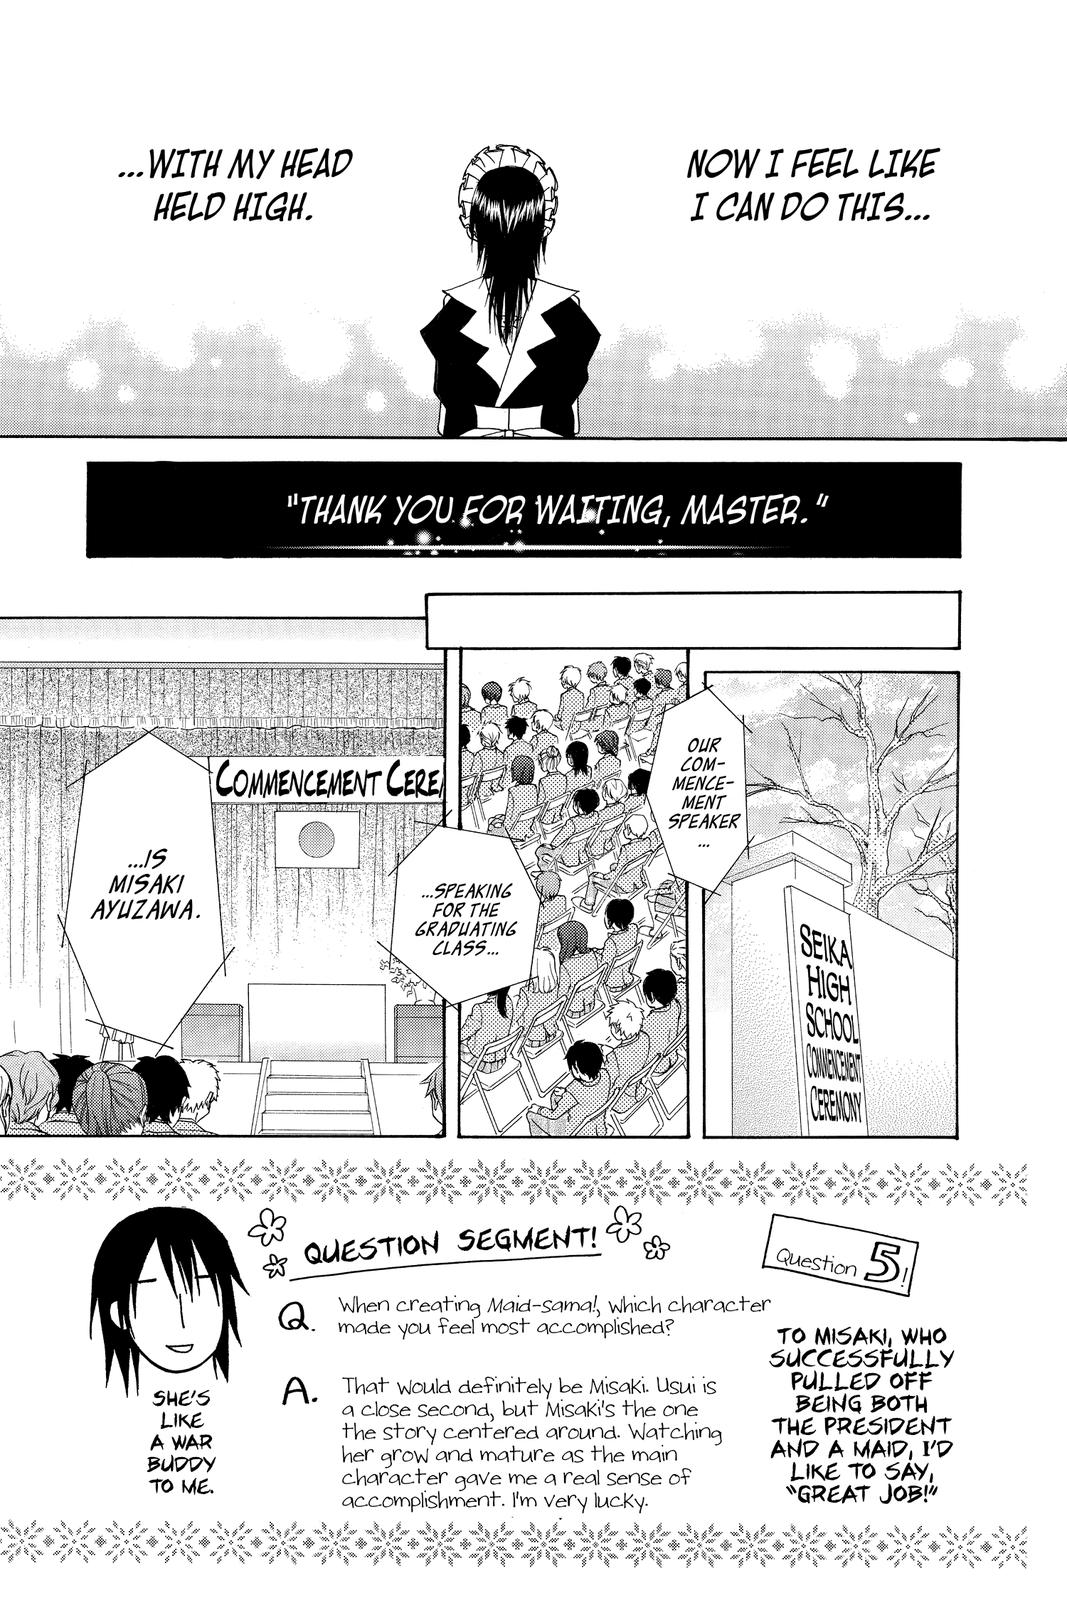 Anime Hitchers: Kaichou wa Maid-sama! Chapter 85 (END, free manga read on  link) - Kaichou wa Maid-sama (Contin.) - Wattpad